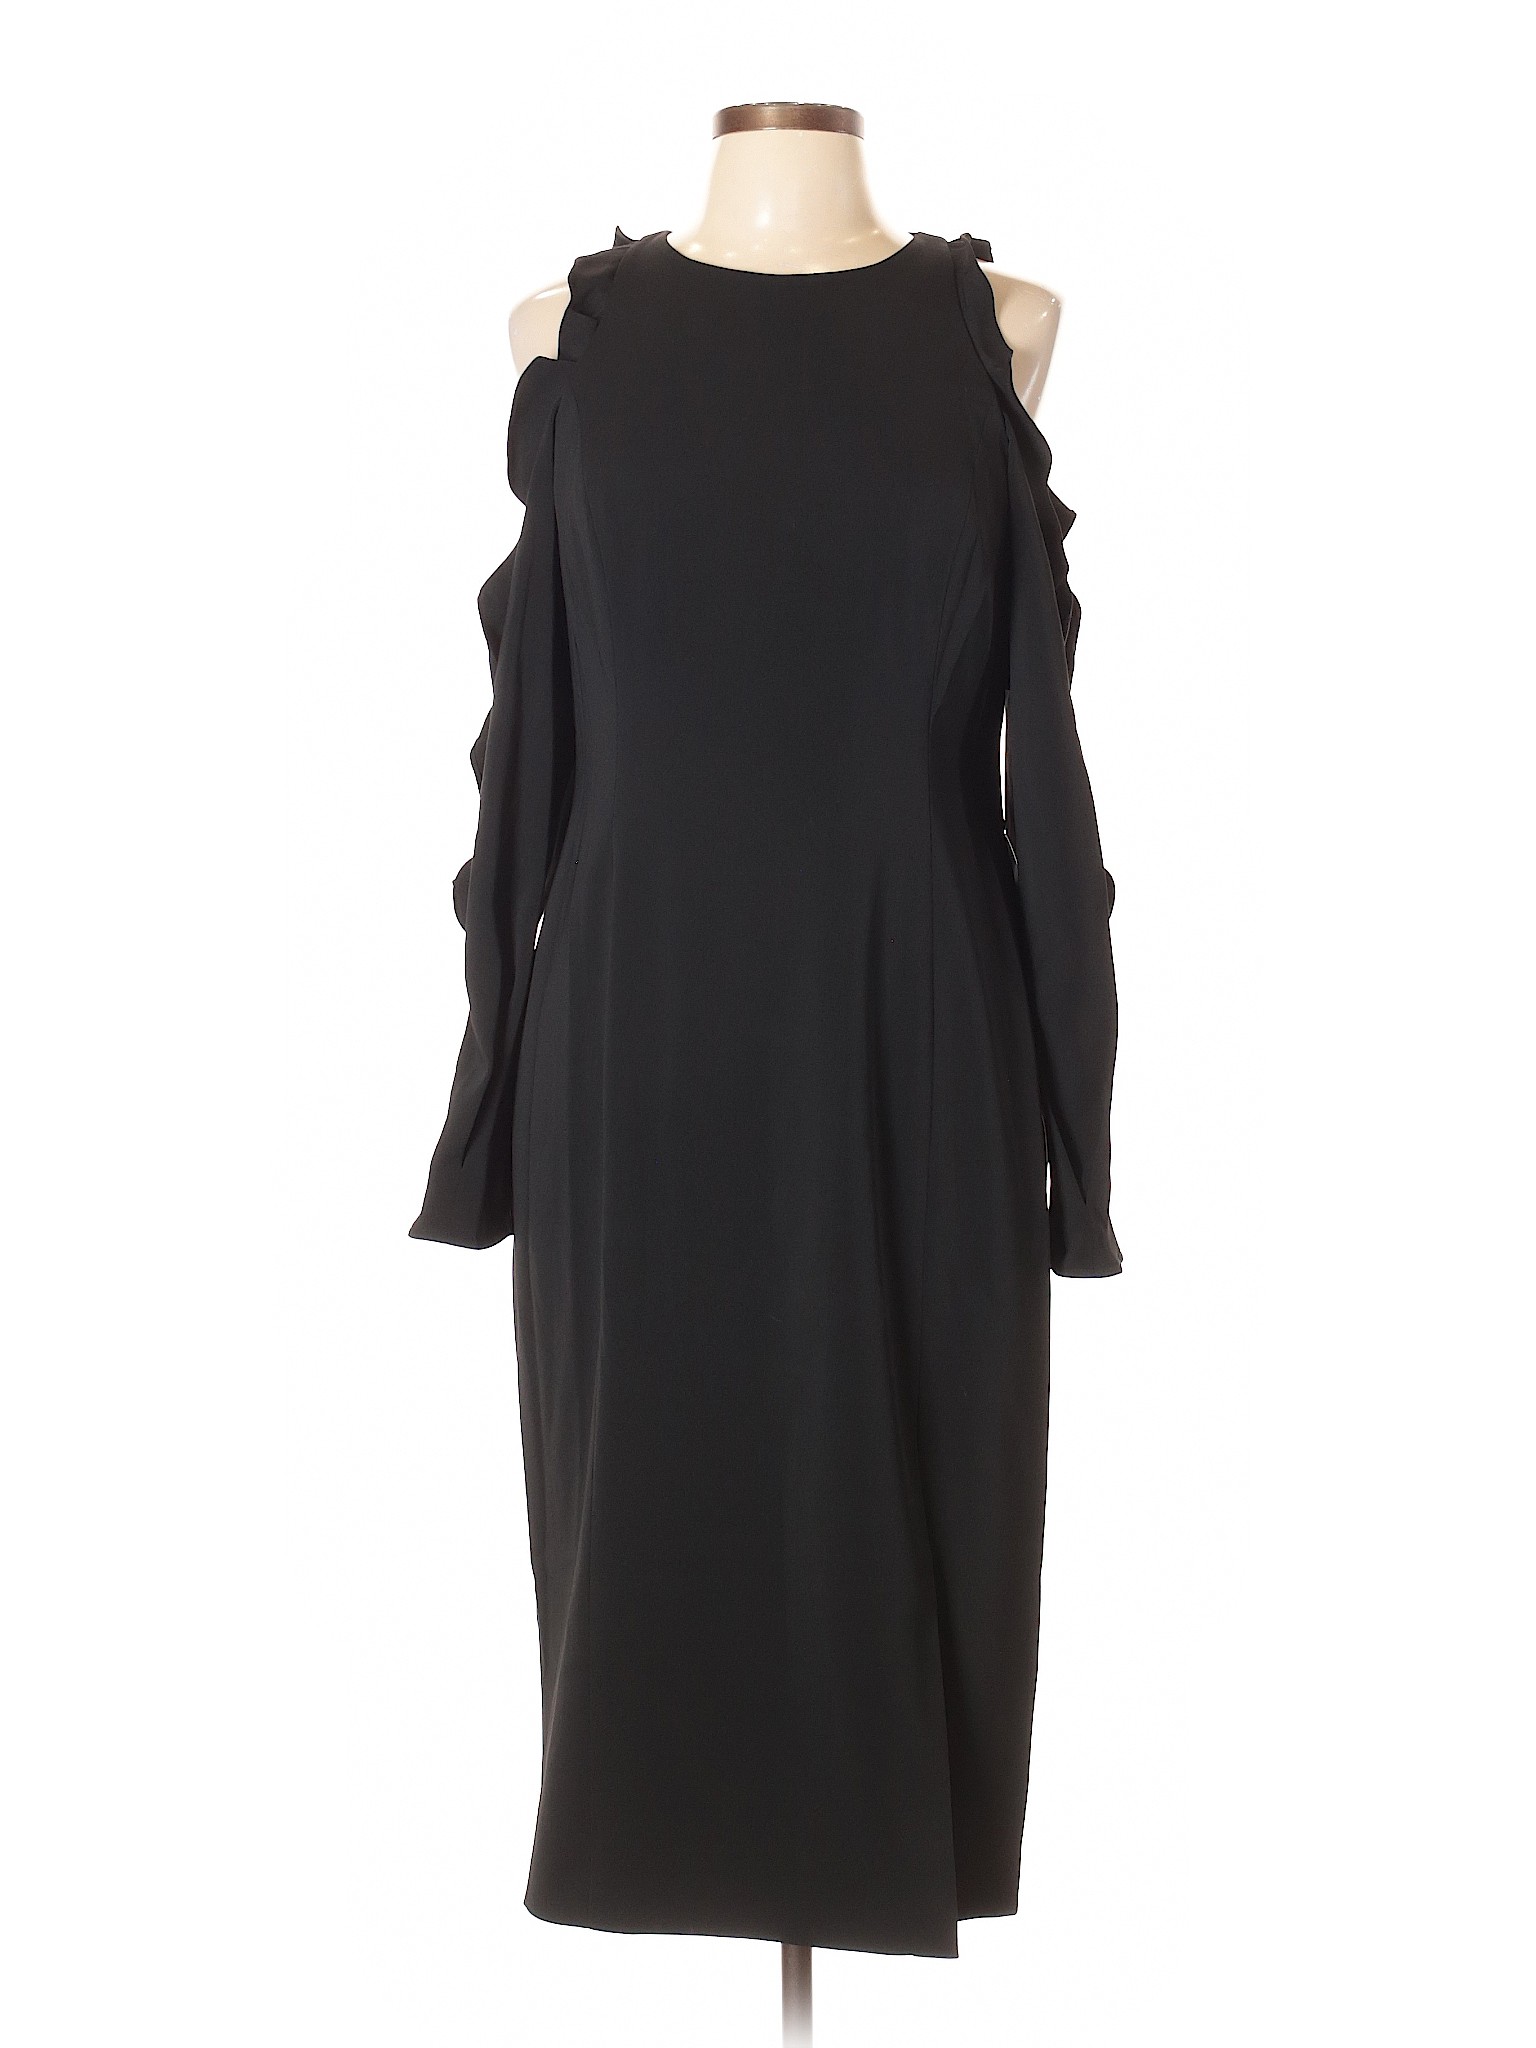 Jay Godfrey Solid Black Casual Dress Size 12 - 86% off | thredUP